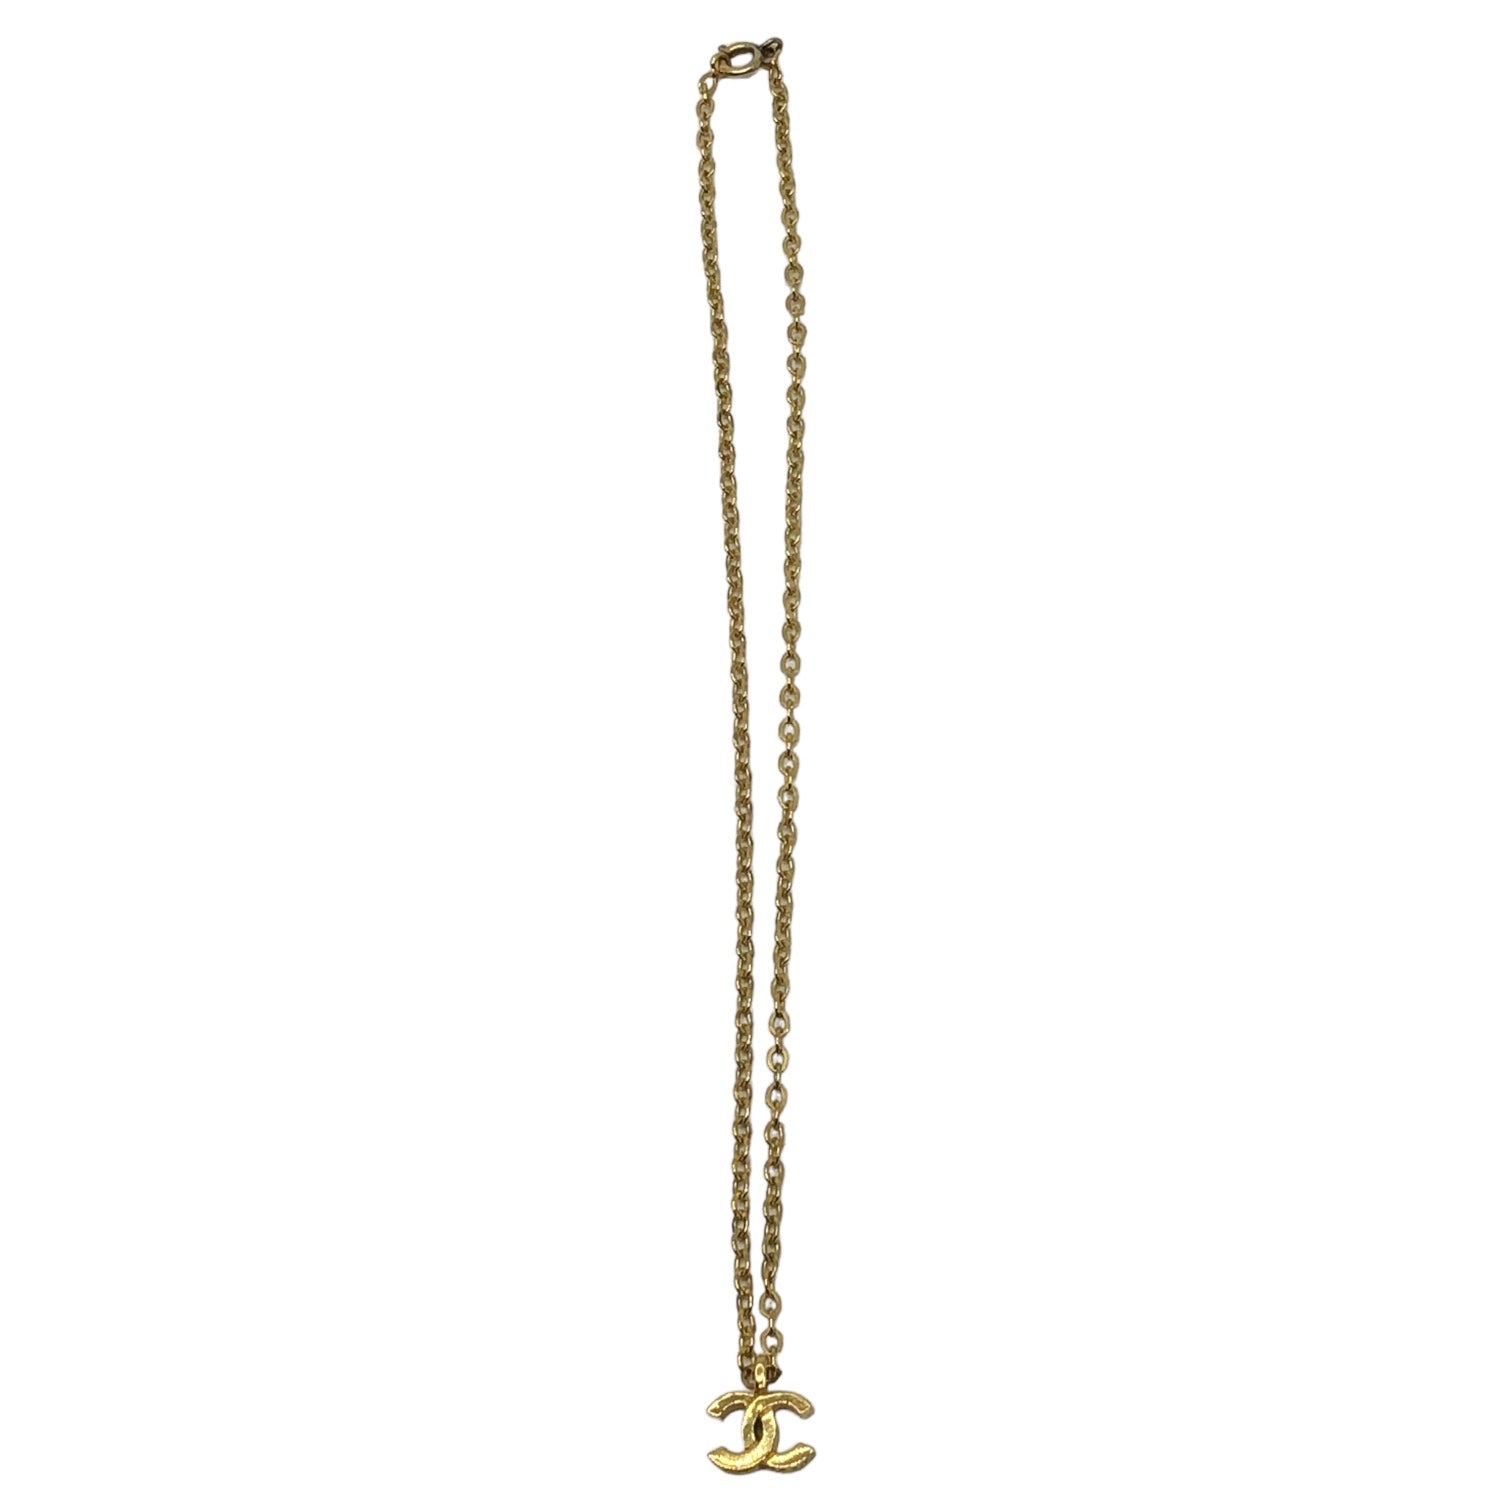 CHANEL(シャネル) 70's coco mark chain necklace ココマーク チェーン ネックレス ゴールド 刻印376 70年代 ヴィンテージ ジュエリー ペンダント